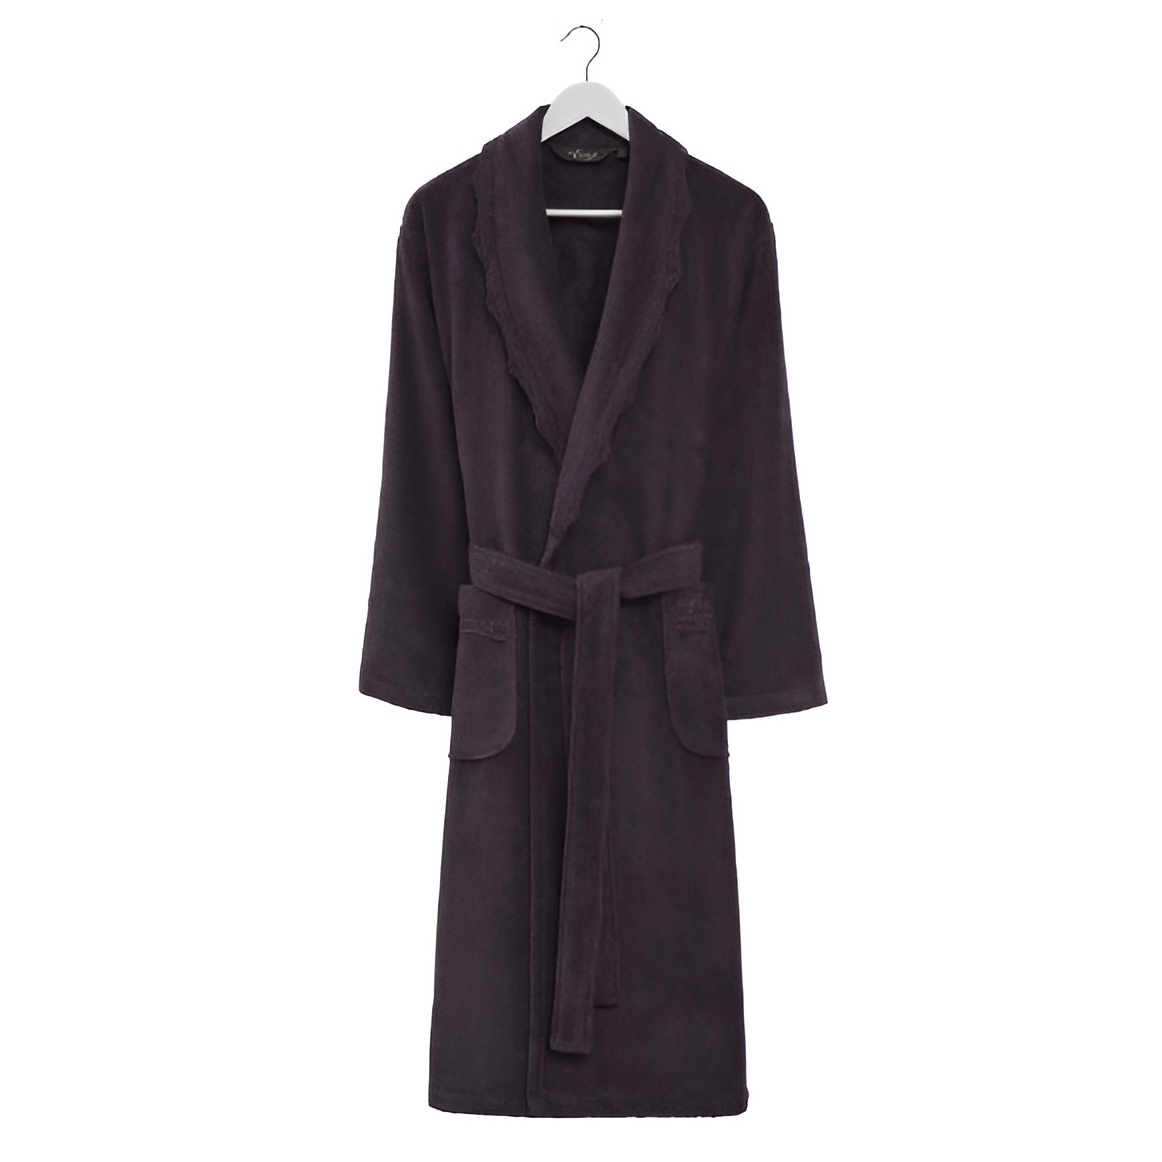 Банный халат Stella цвет: фиолетовый (M) Soft cotton